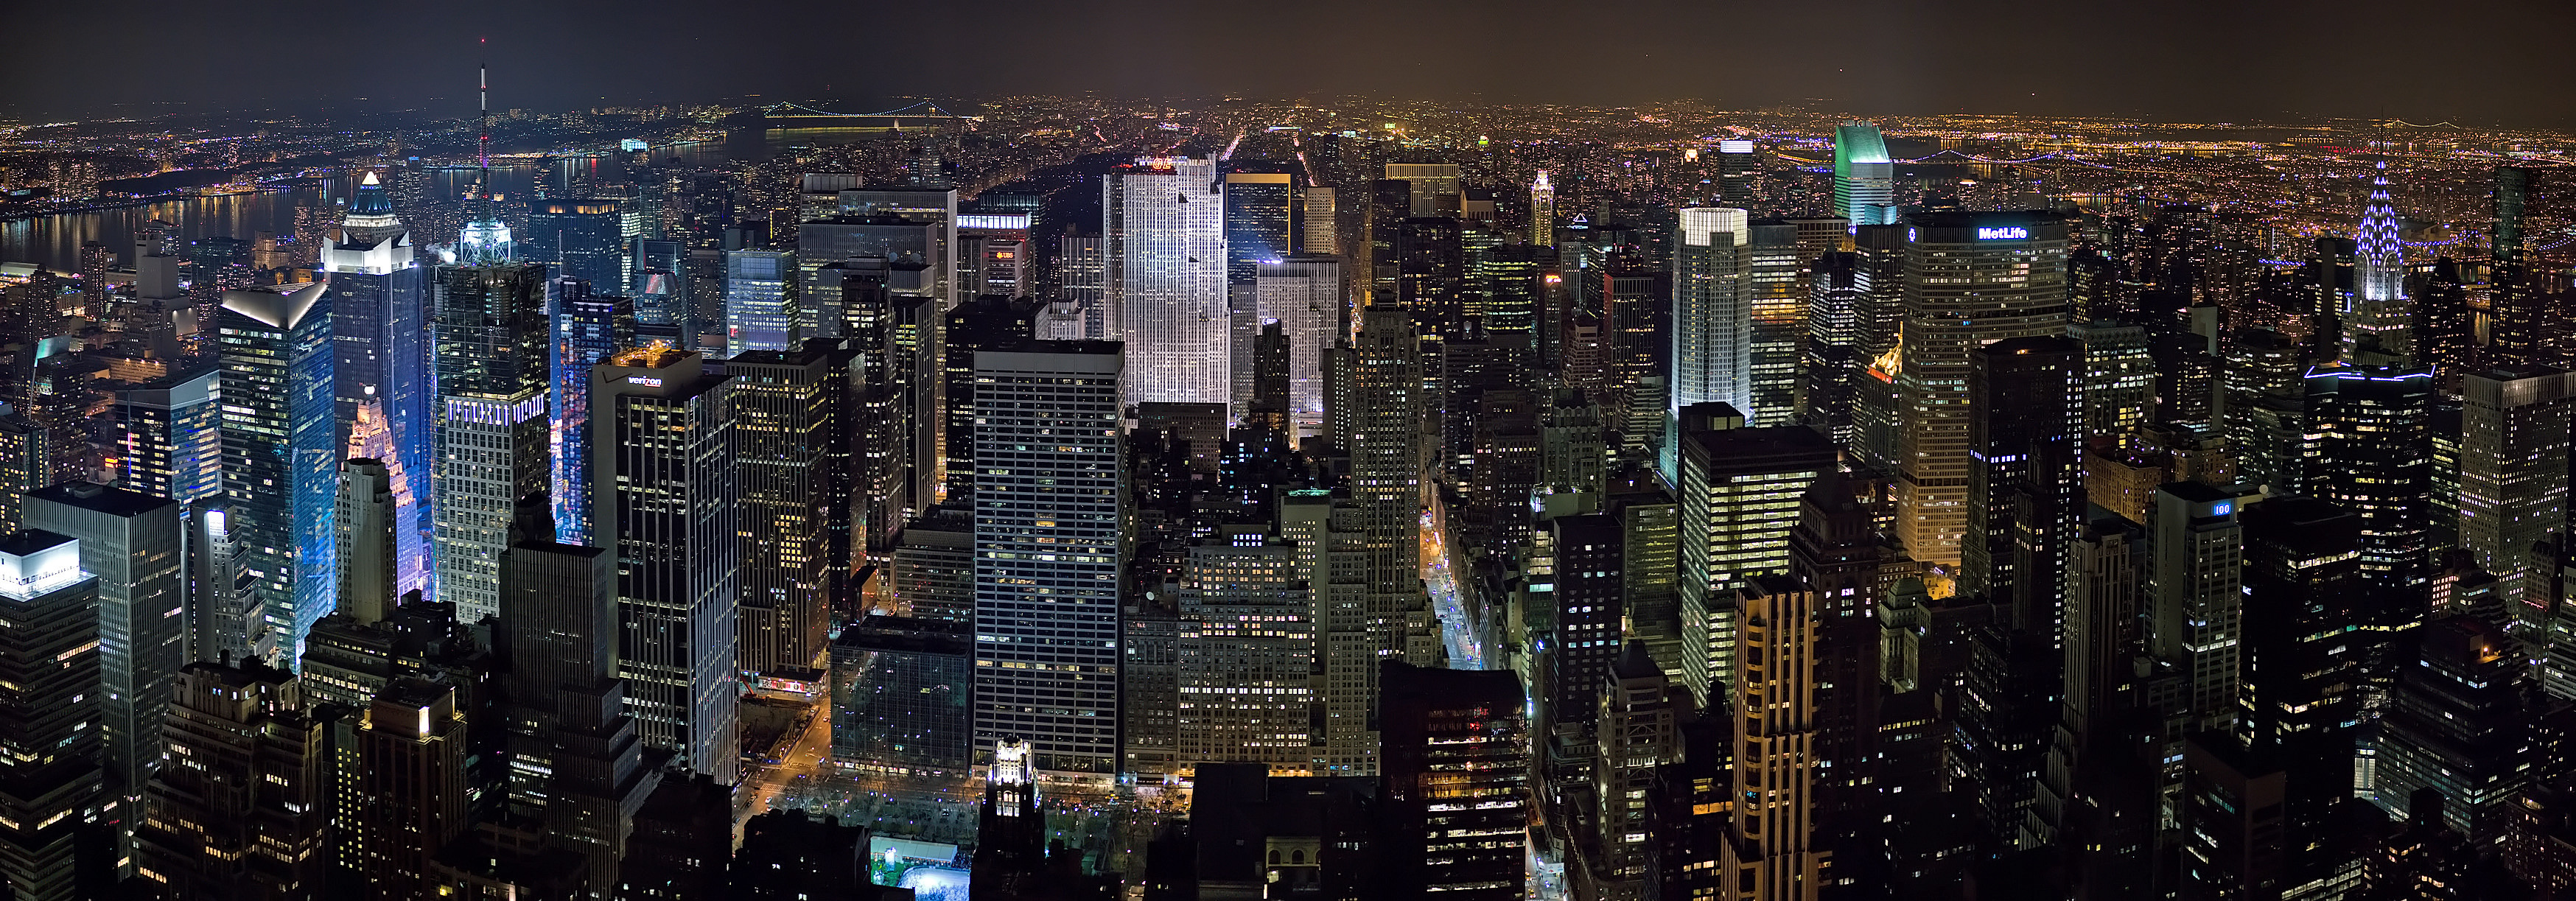 3496x1223 File:New York Midtown Skyline at night - Jan 2006 edit1.jpg